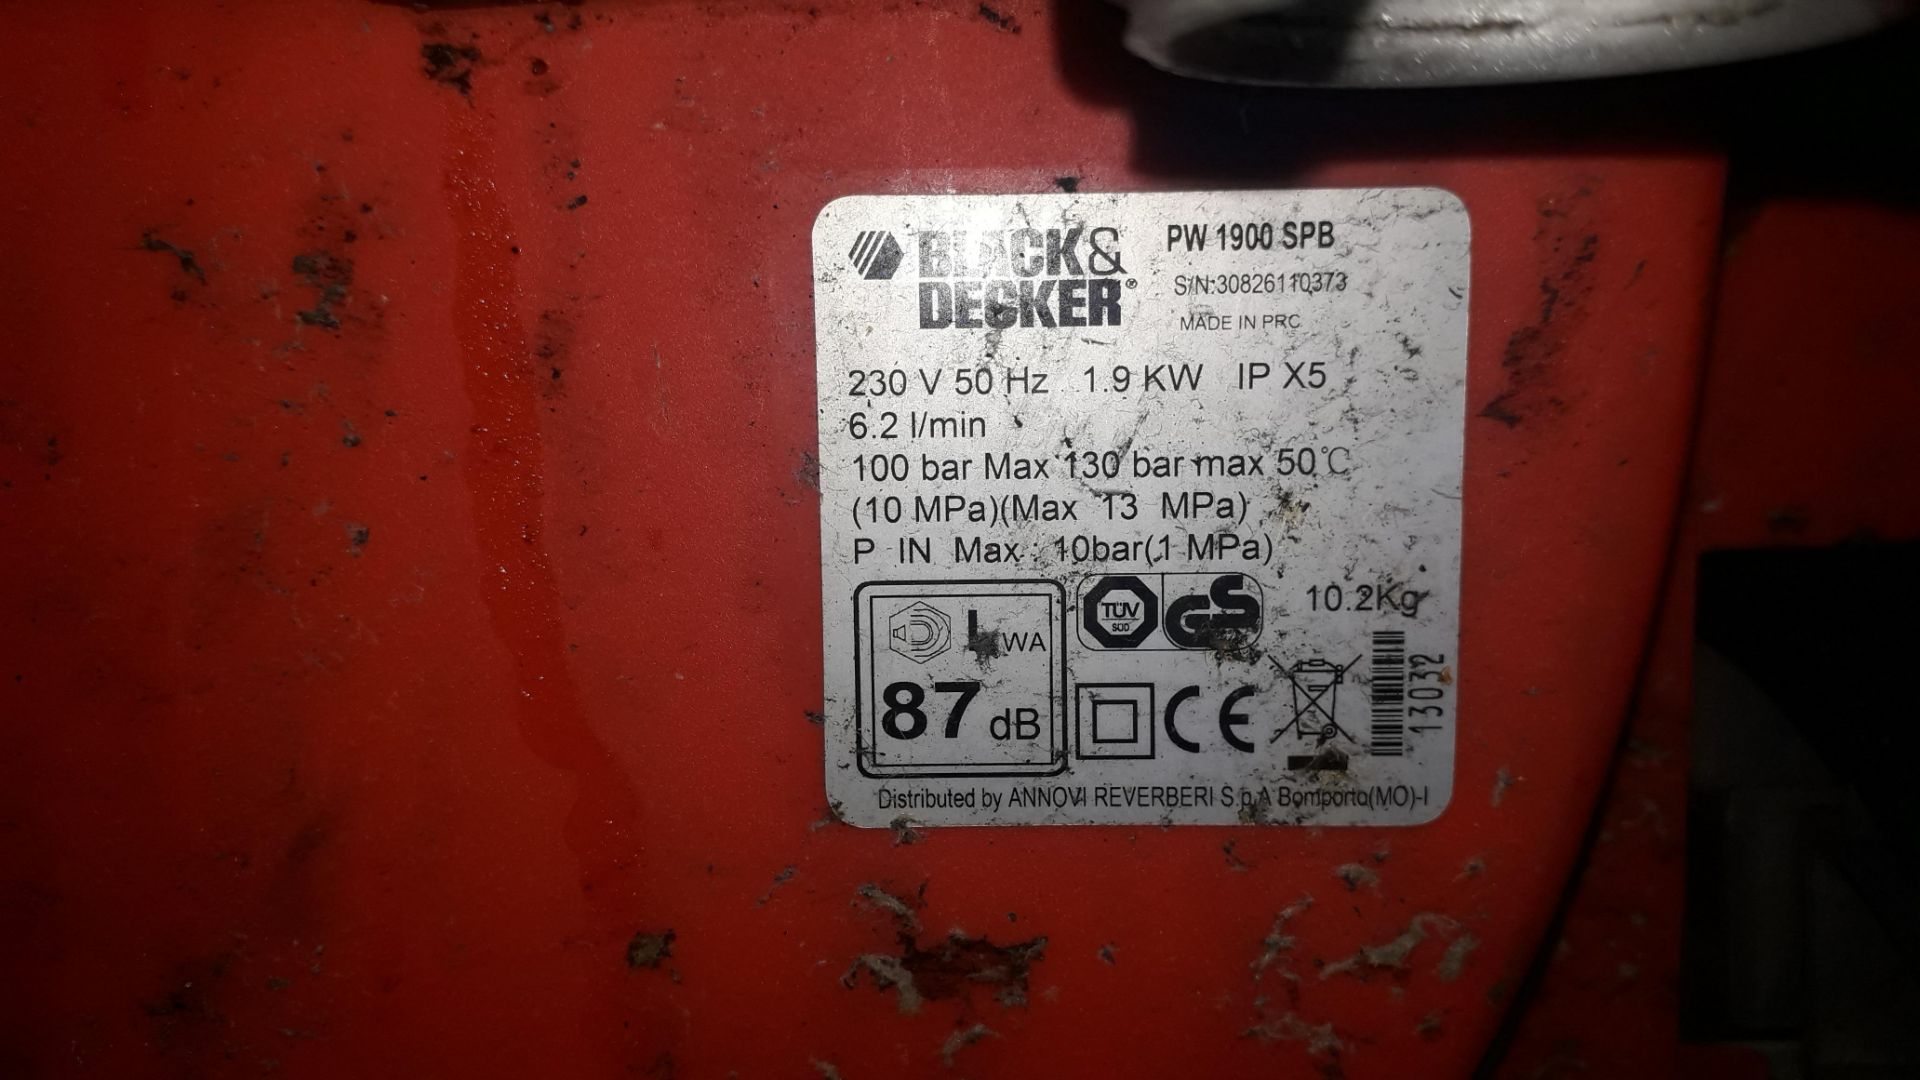 Black & Decker PW19OOSPB Pressure Washer with Hose Reel - Image 3 of 3